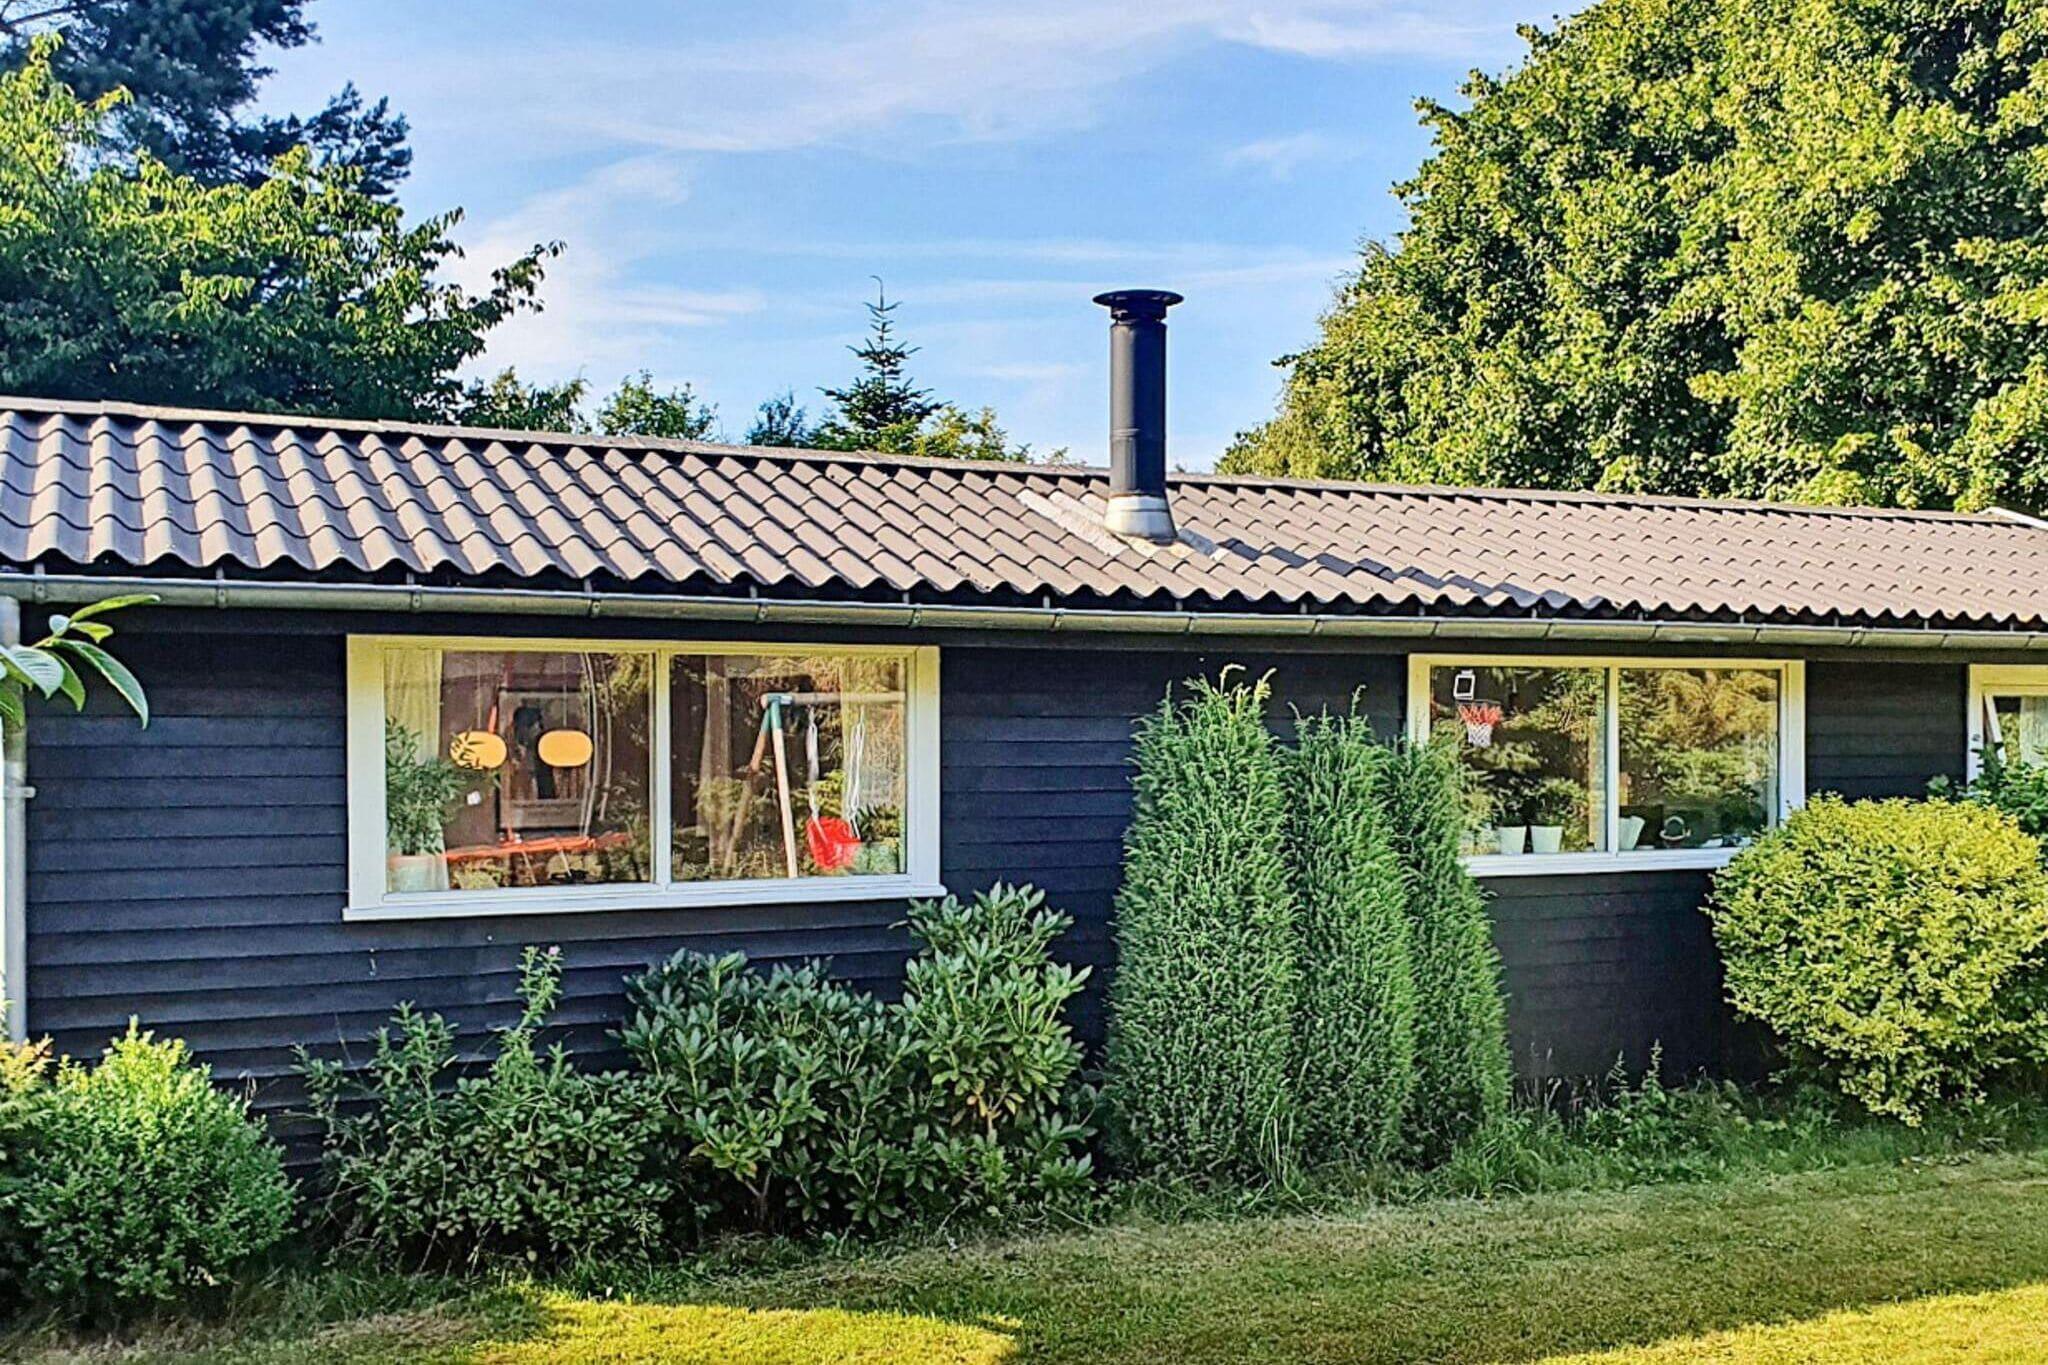 Sommerhus til 6 personer ved Højby